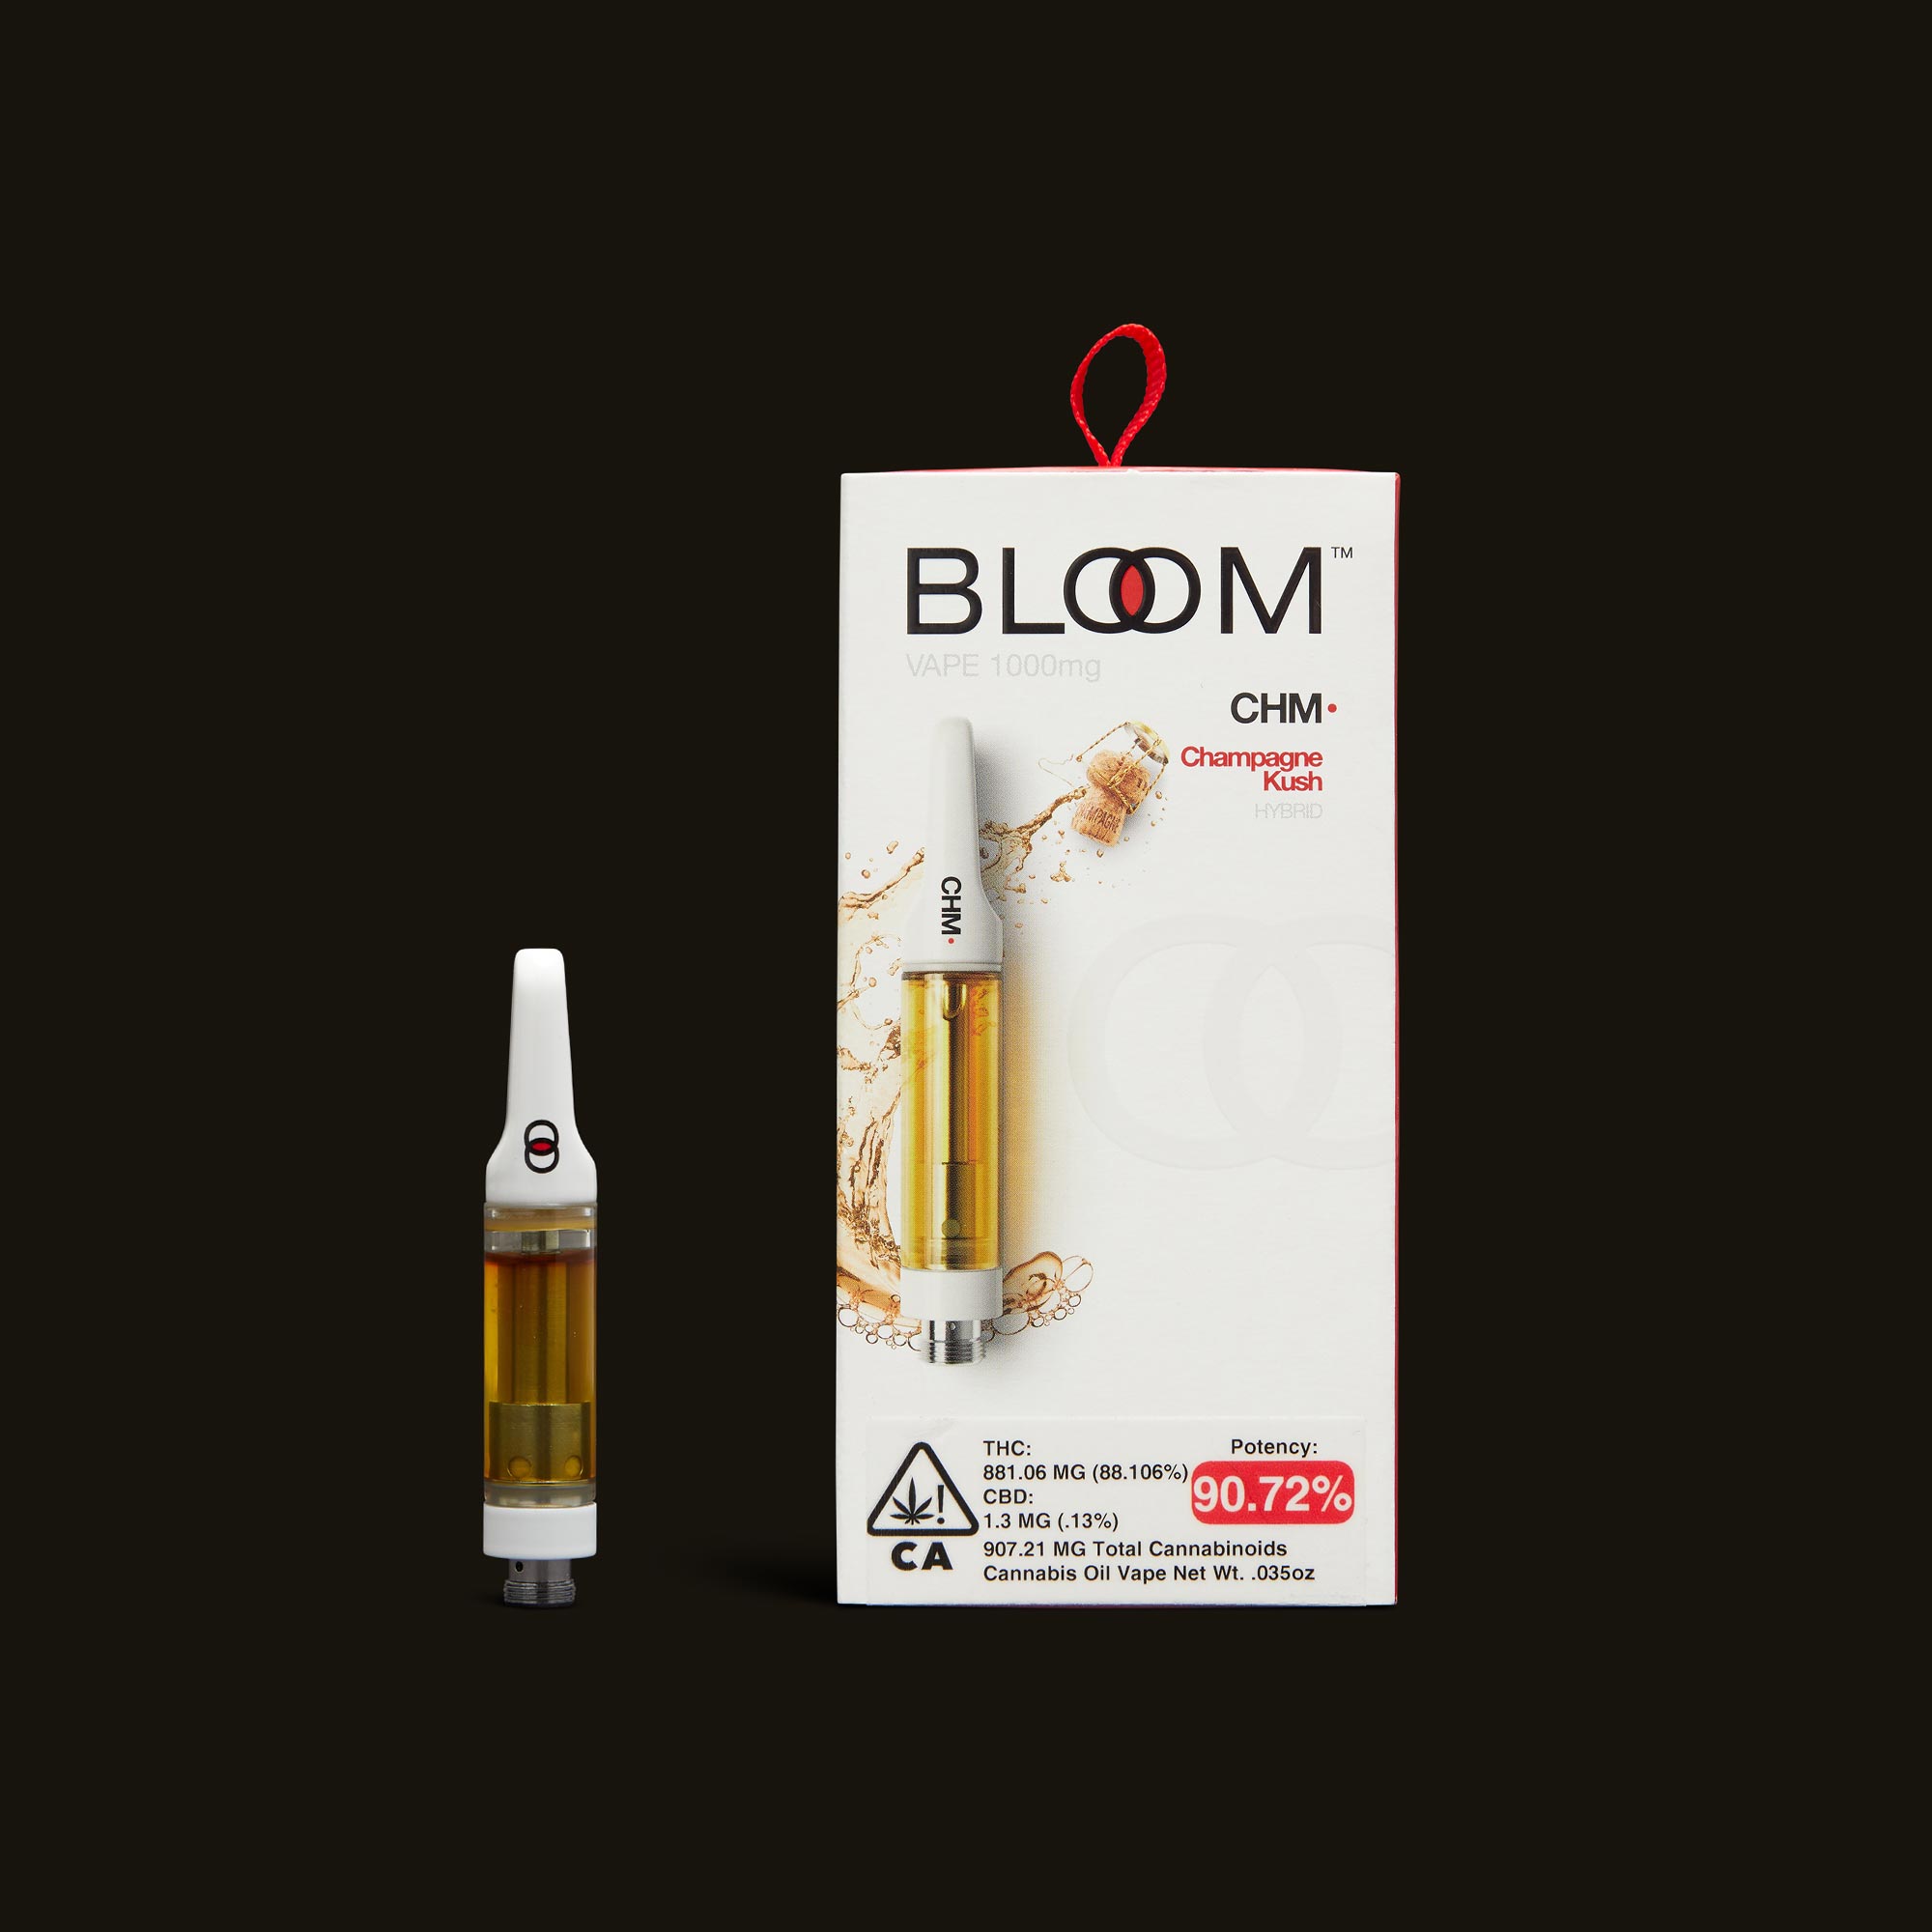 Bloom-Champagne-Kush-Cartridge-1g3682-1-2264083.jpg